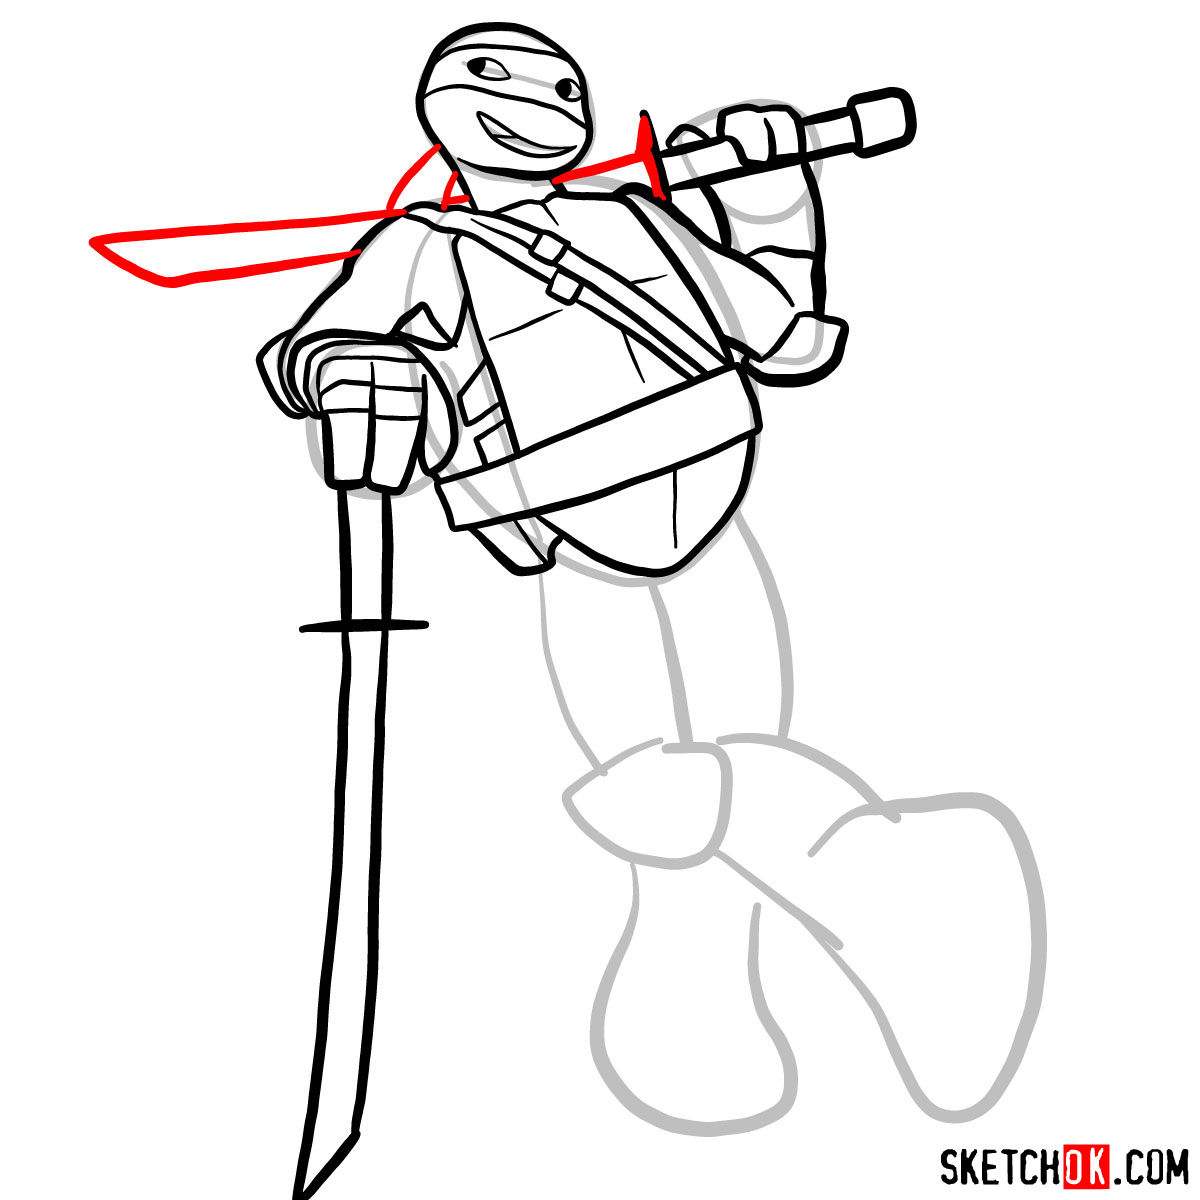 How to draw Leonardo ninja turtle cartoon style - step 09